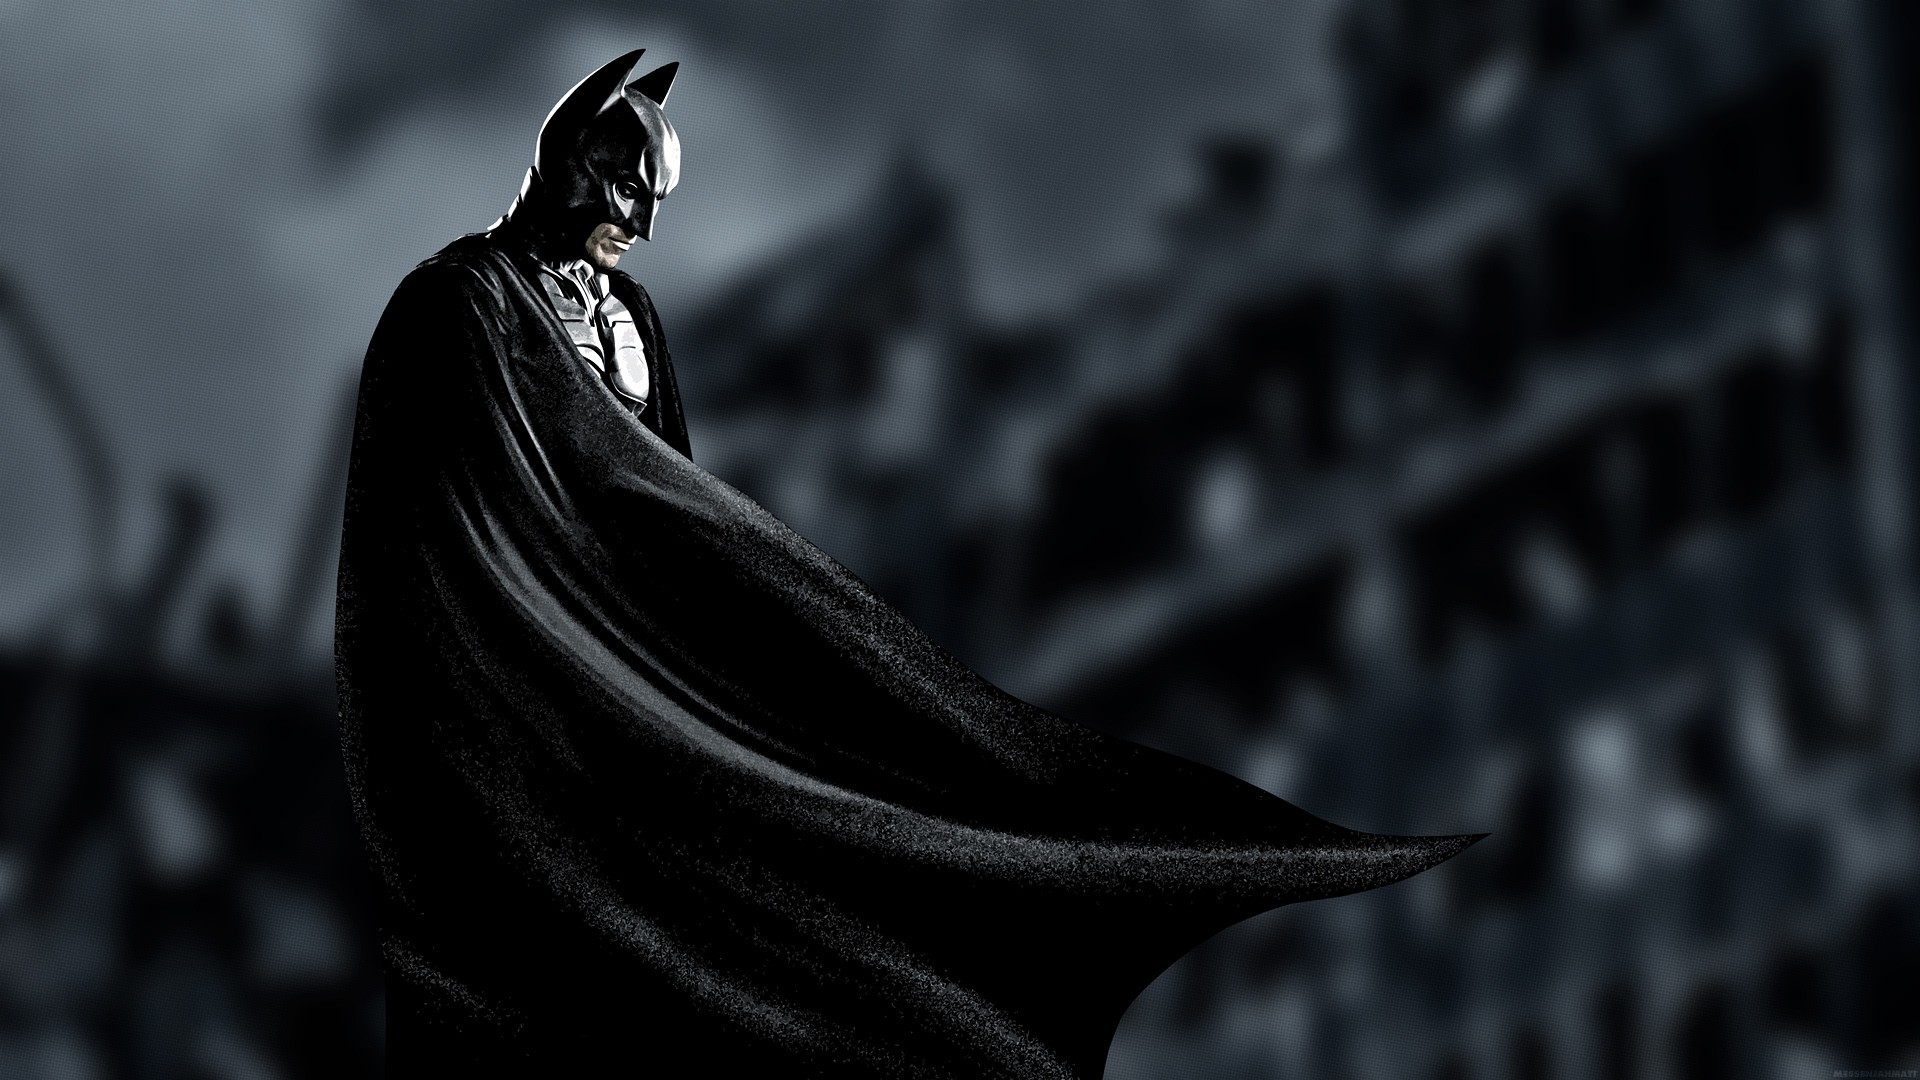 1920x1080 Full View and Download Batman Superheroes Wallpaper 3